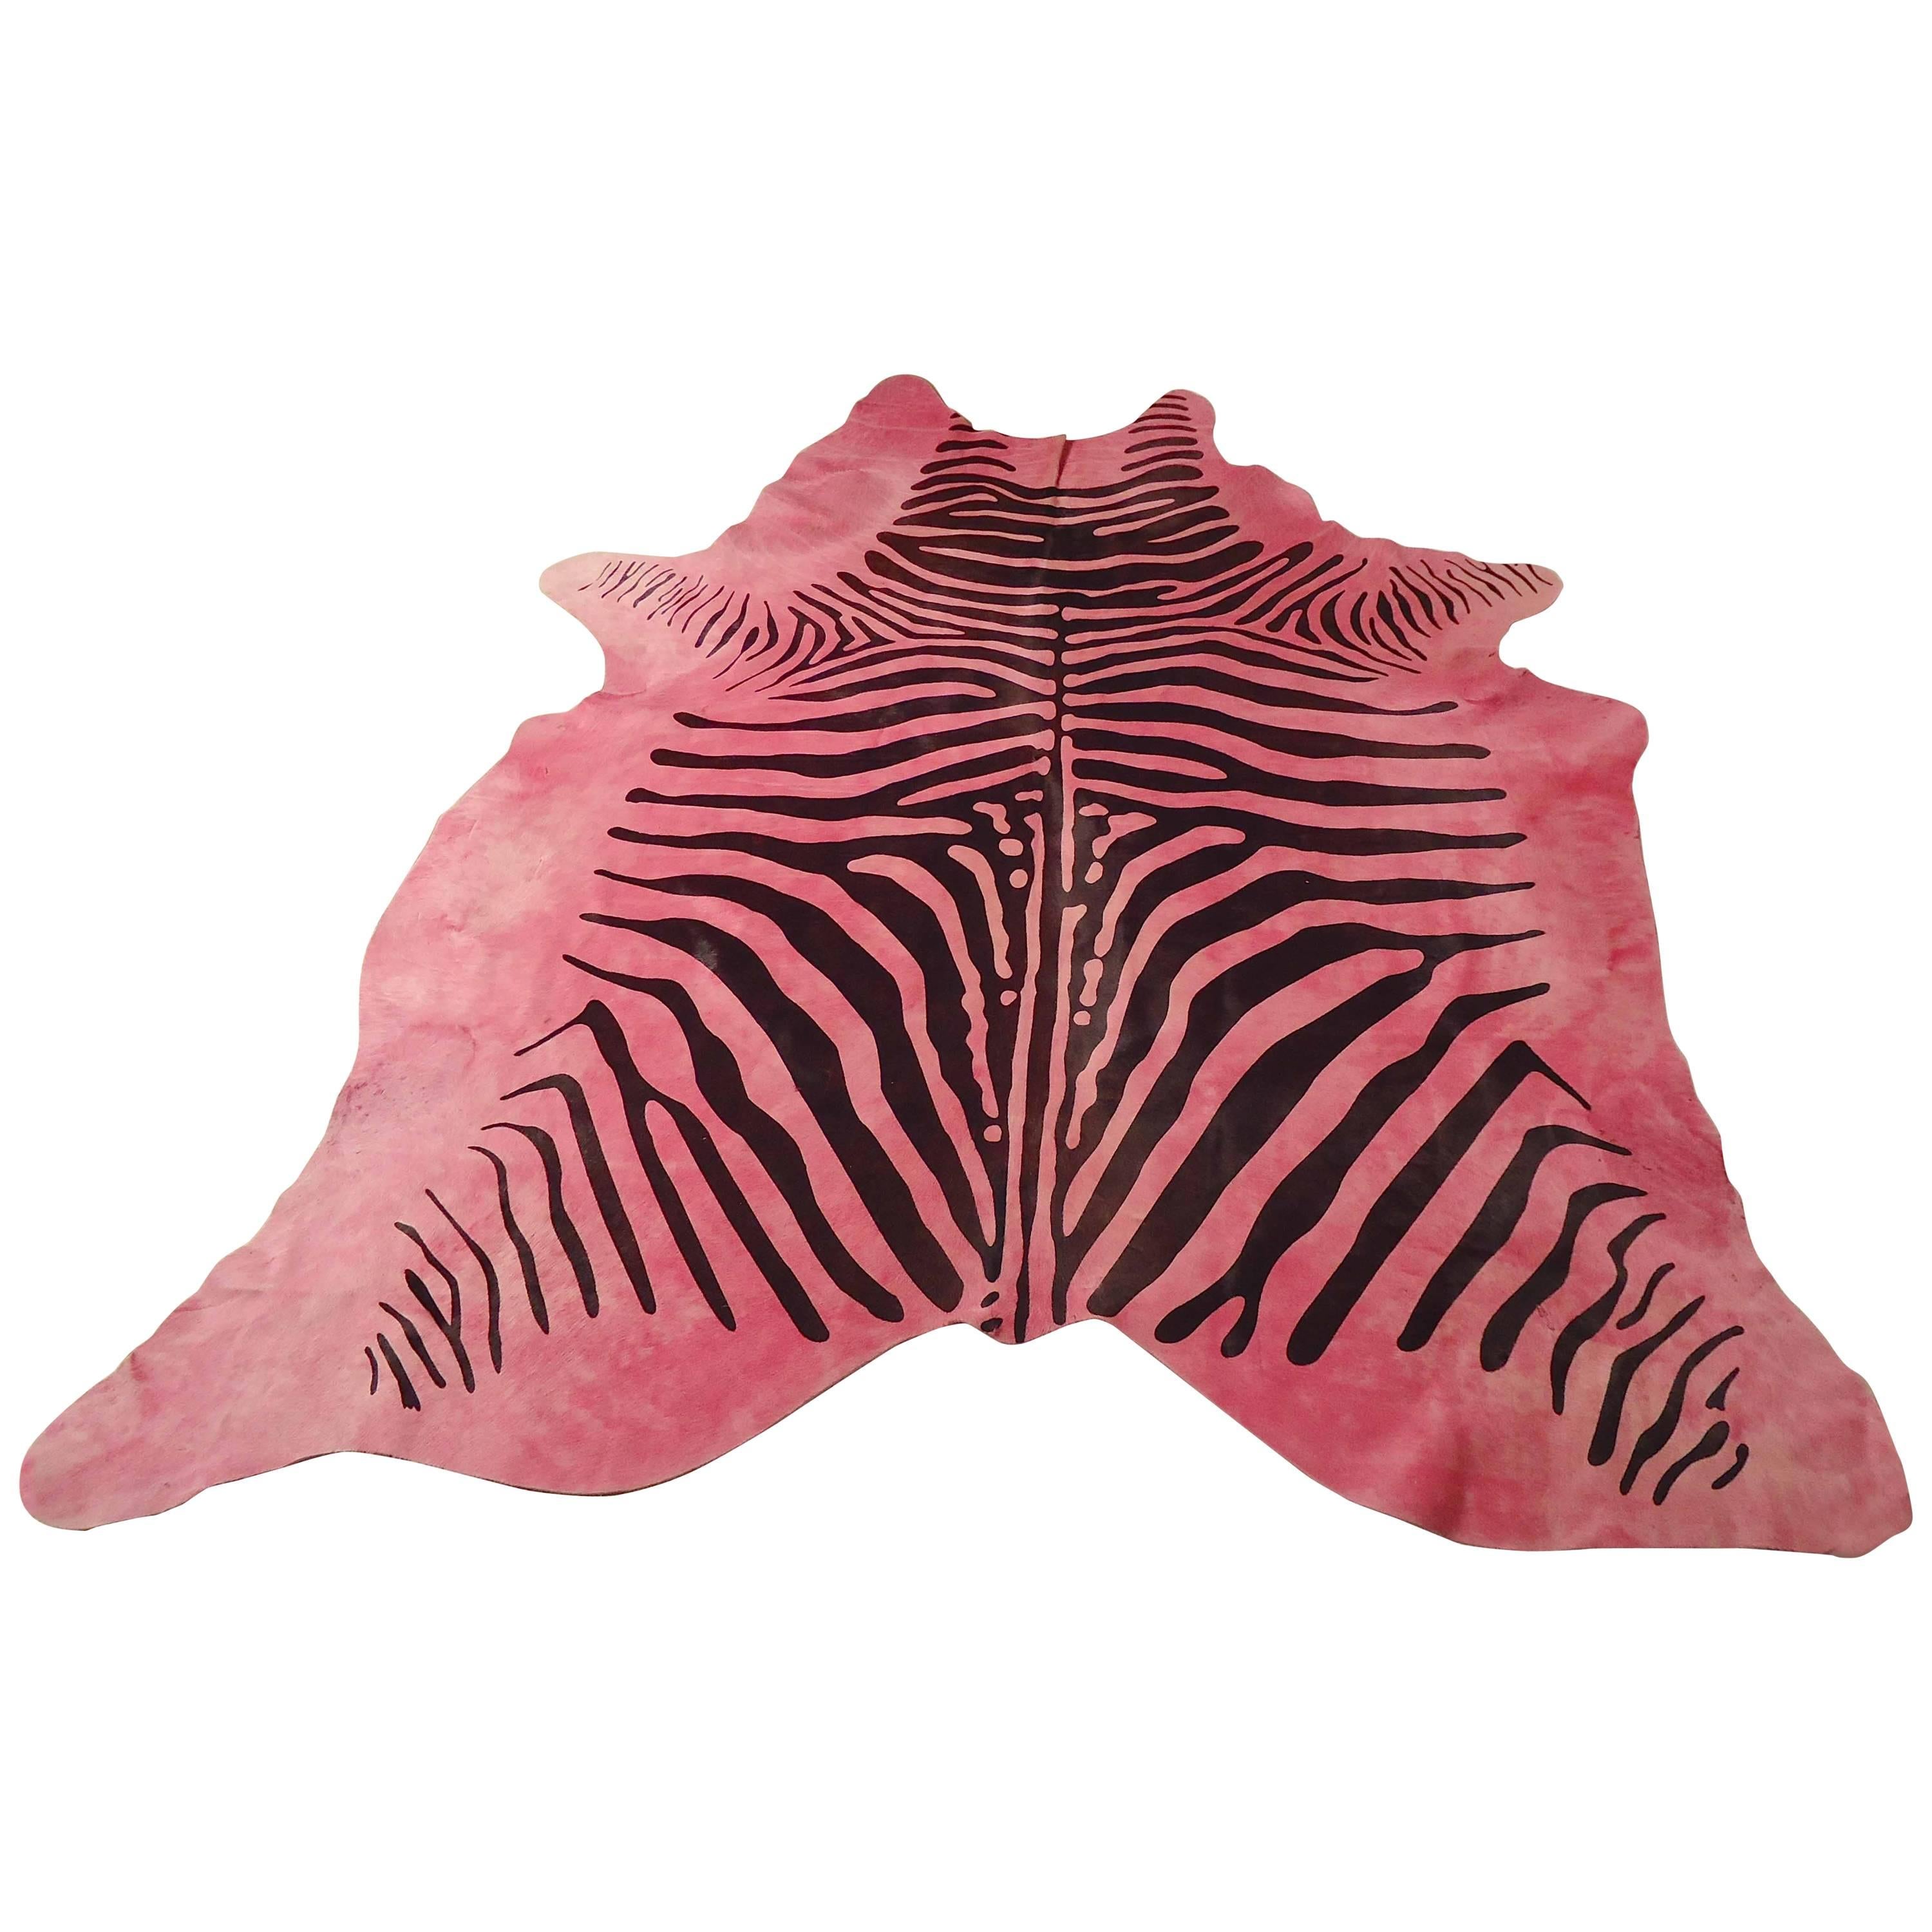 Vibrant Pink Zebra Rug